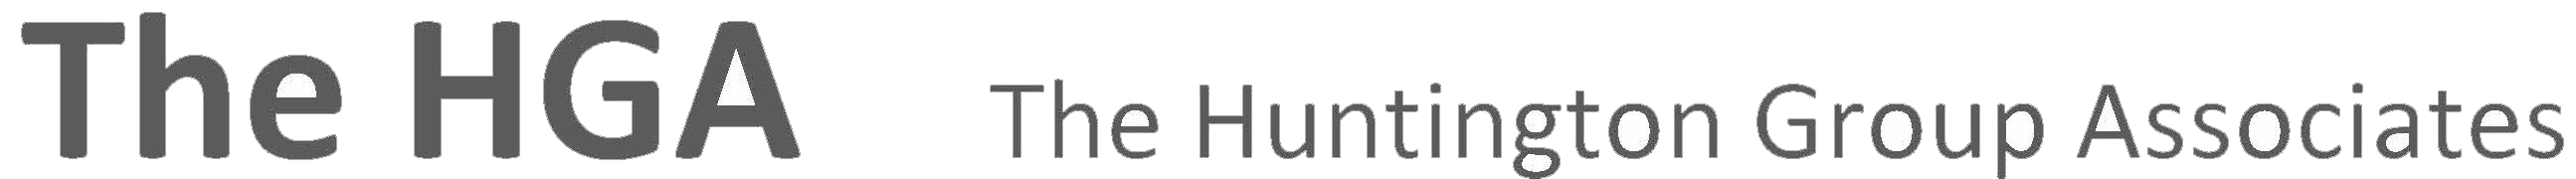 The HGA The Huntington Group Associates